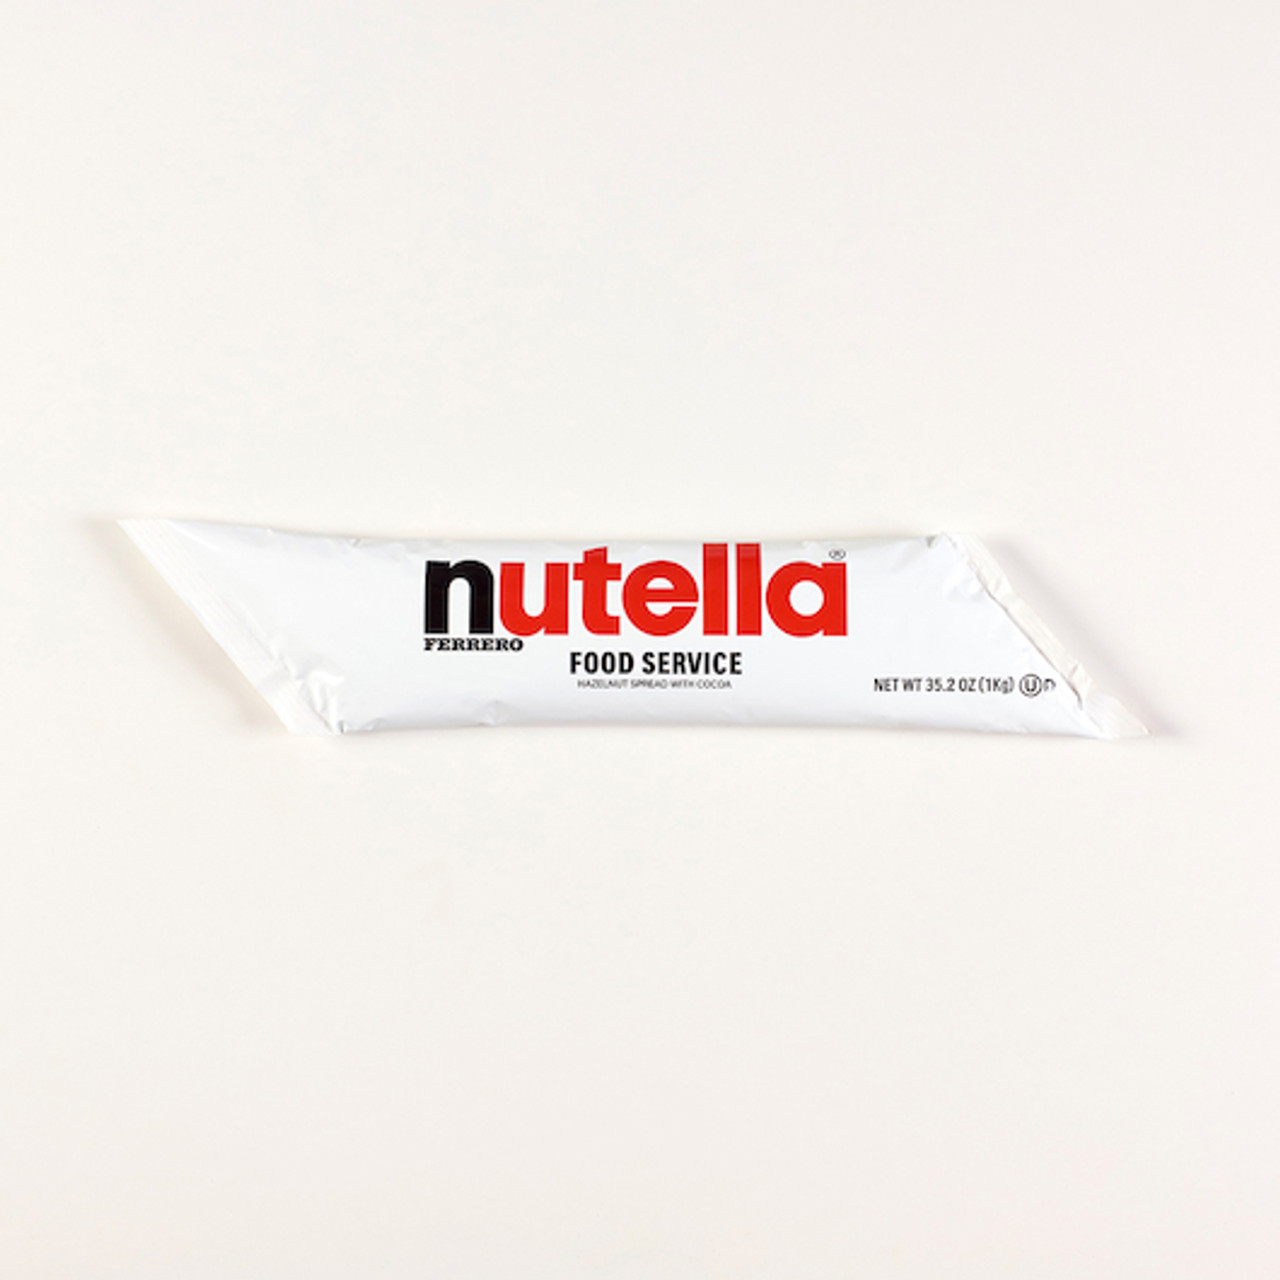 Nutella - 1 kg